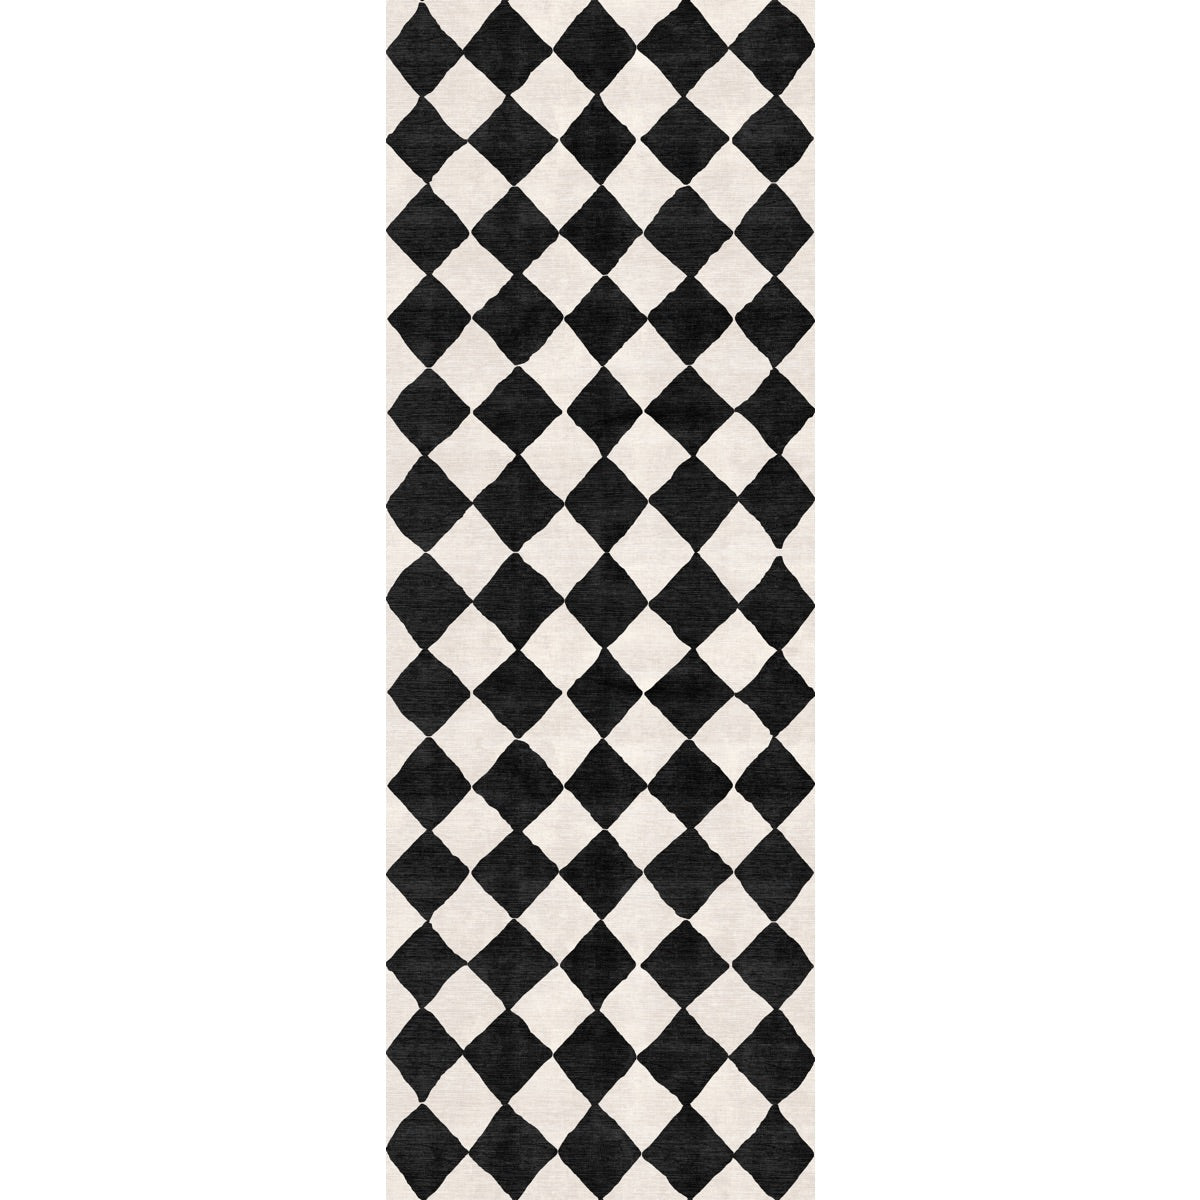 Trestres Checkered Black & Ivory Rug